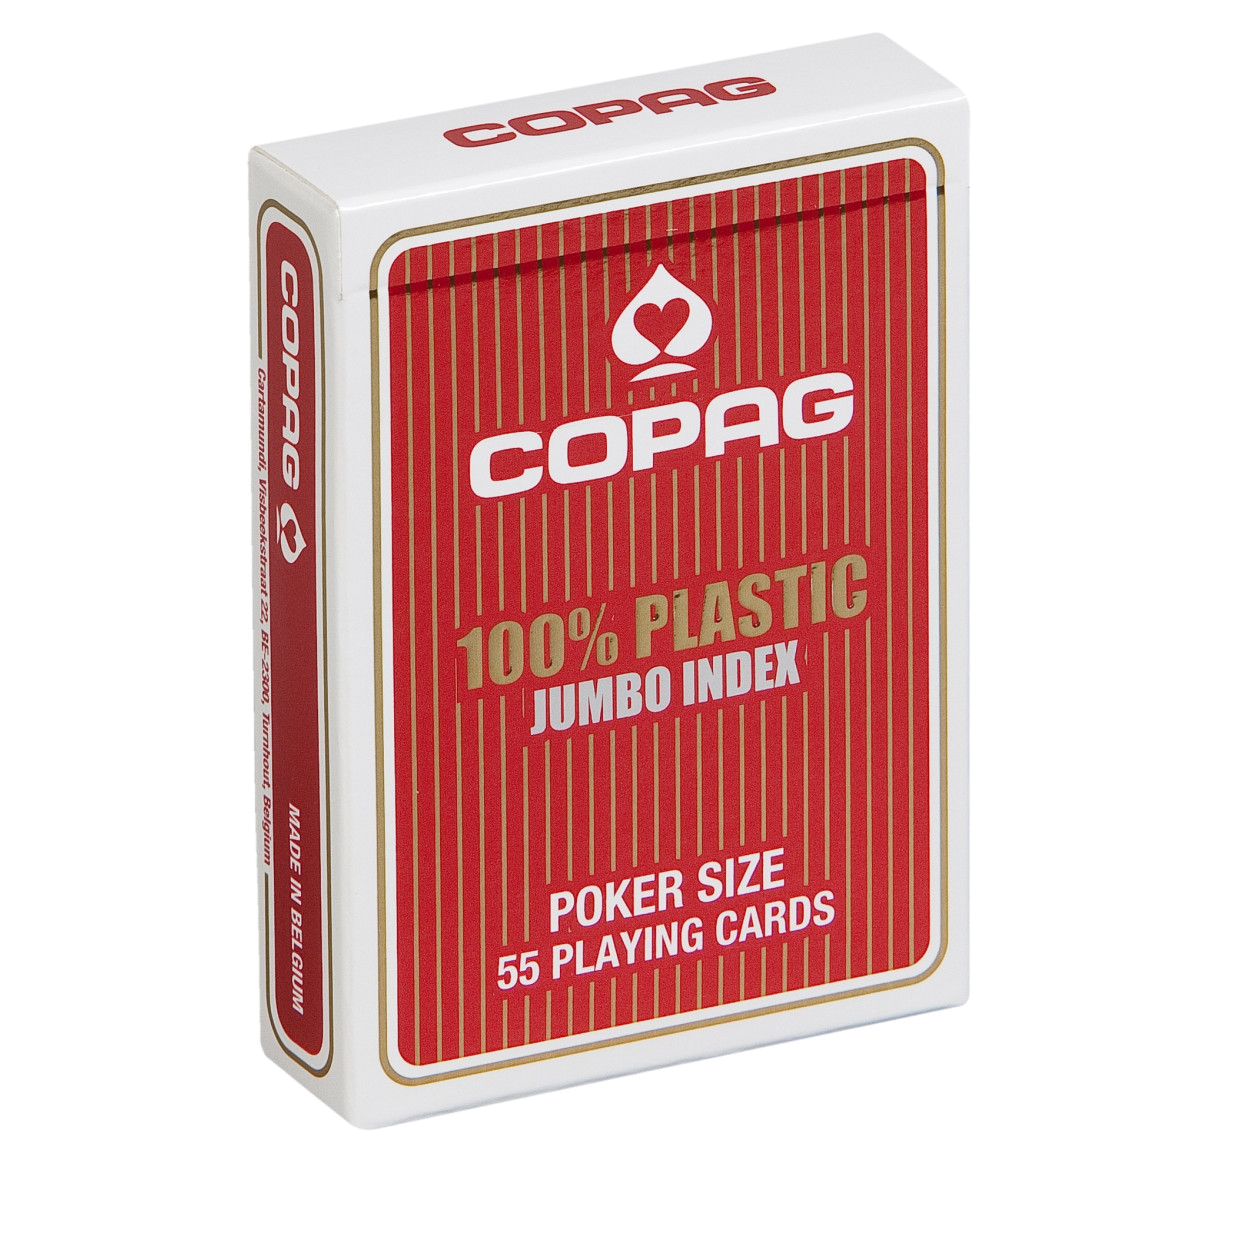 Copag Jumbo (100% plastik)